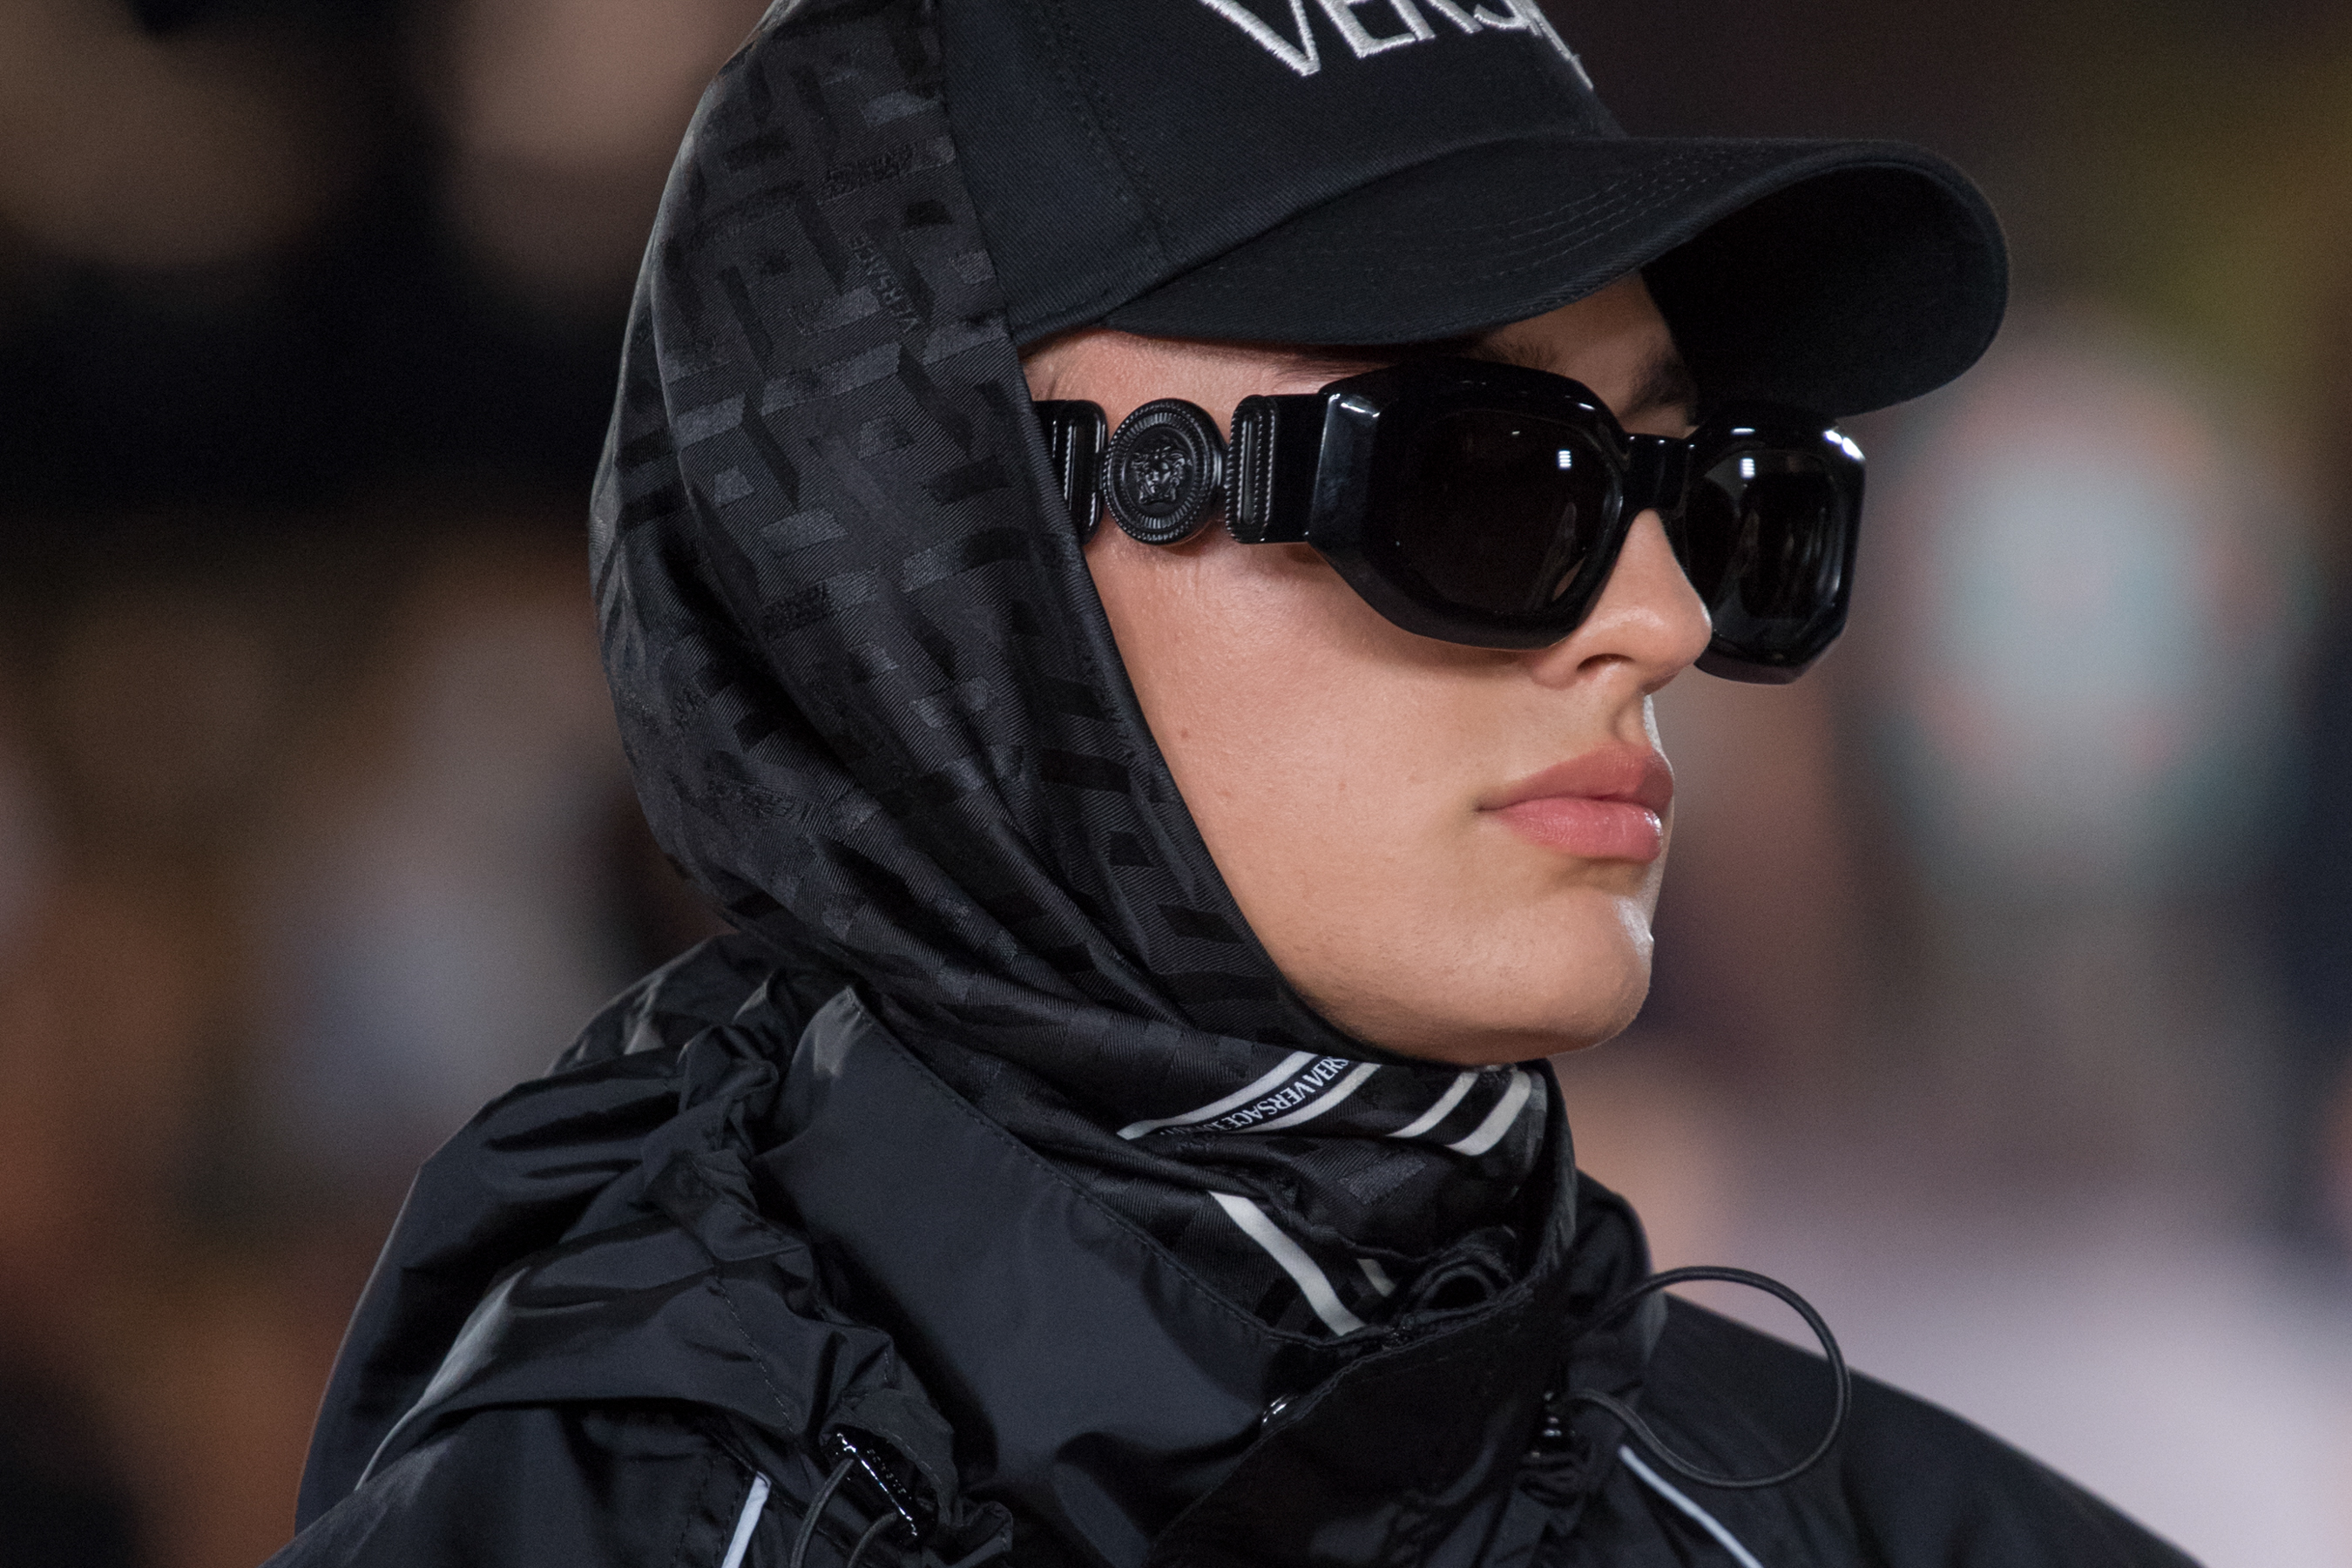 Versace Spring 2022 Details Fashion Show